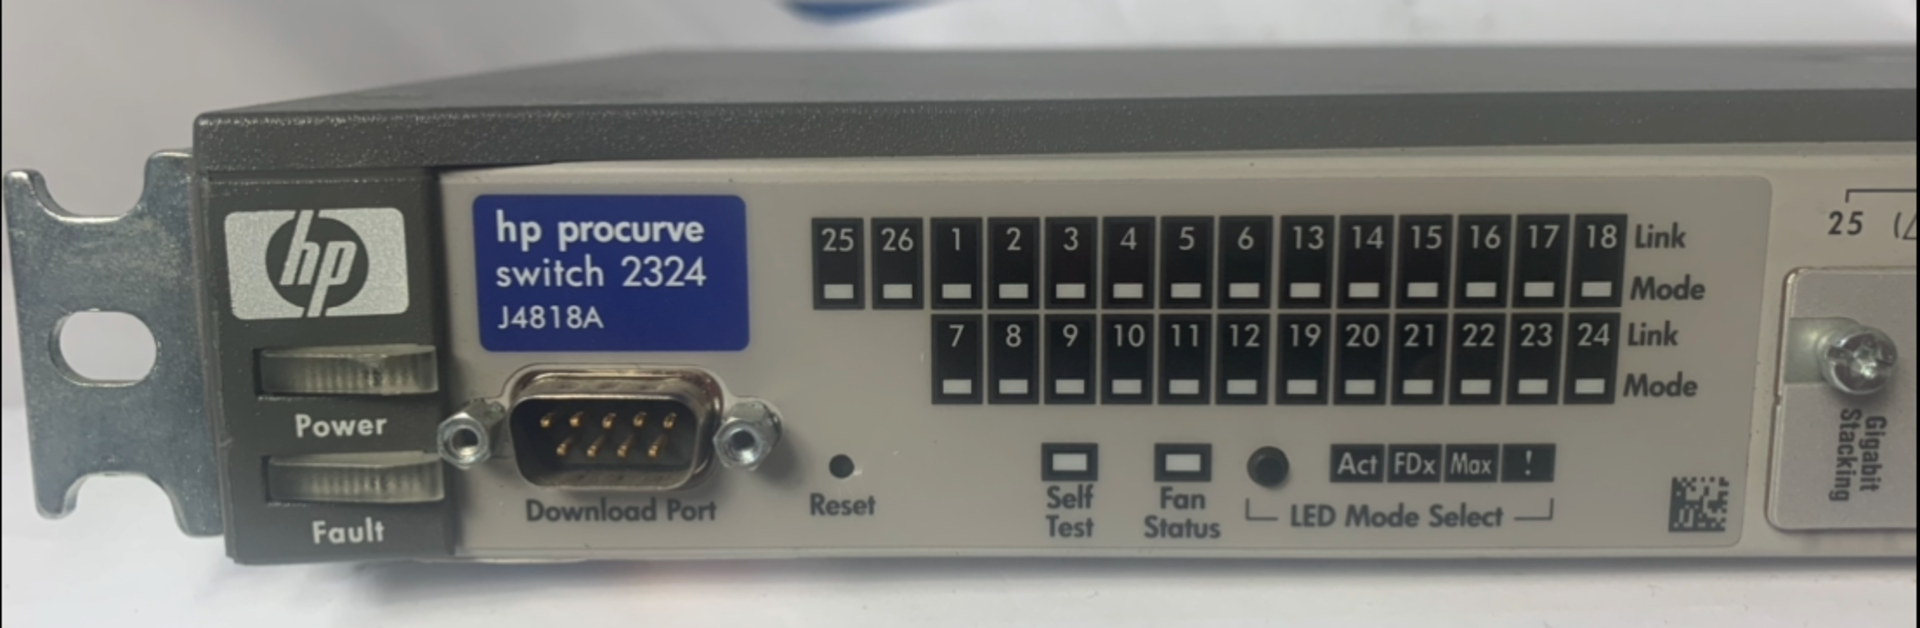 HP J4818A Pro 24 Port Switch - Image 2 of 5